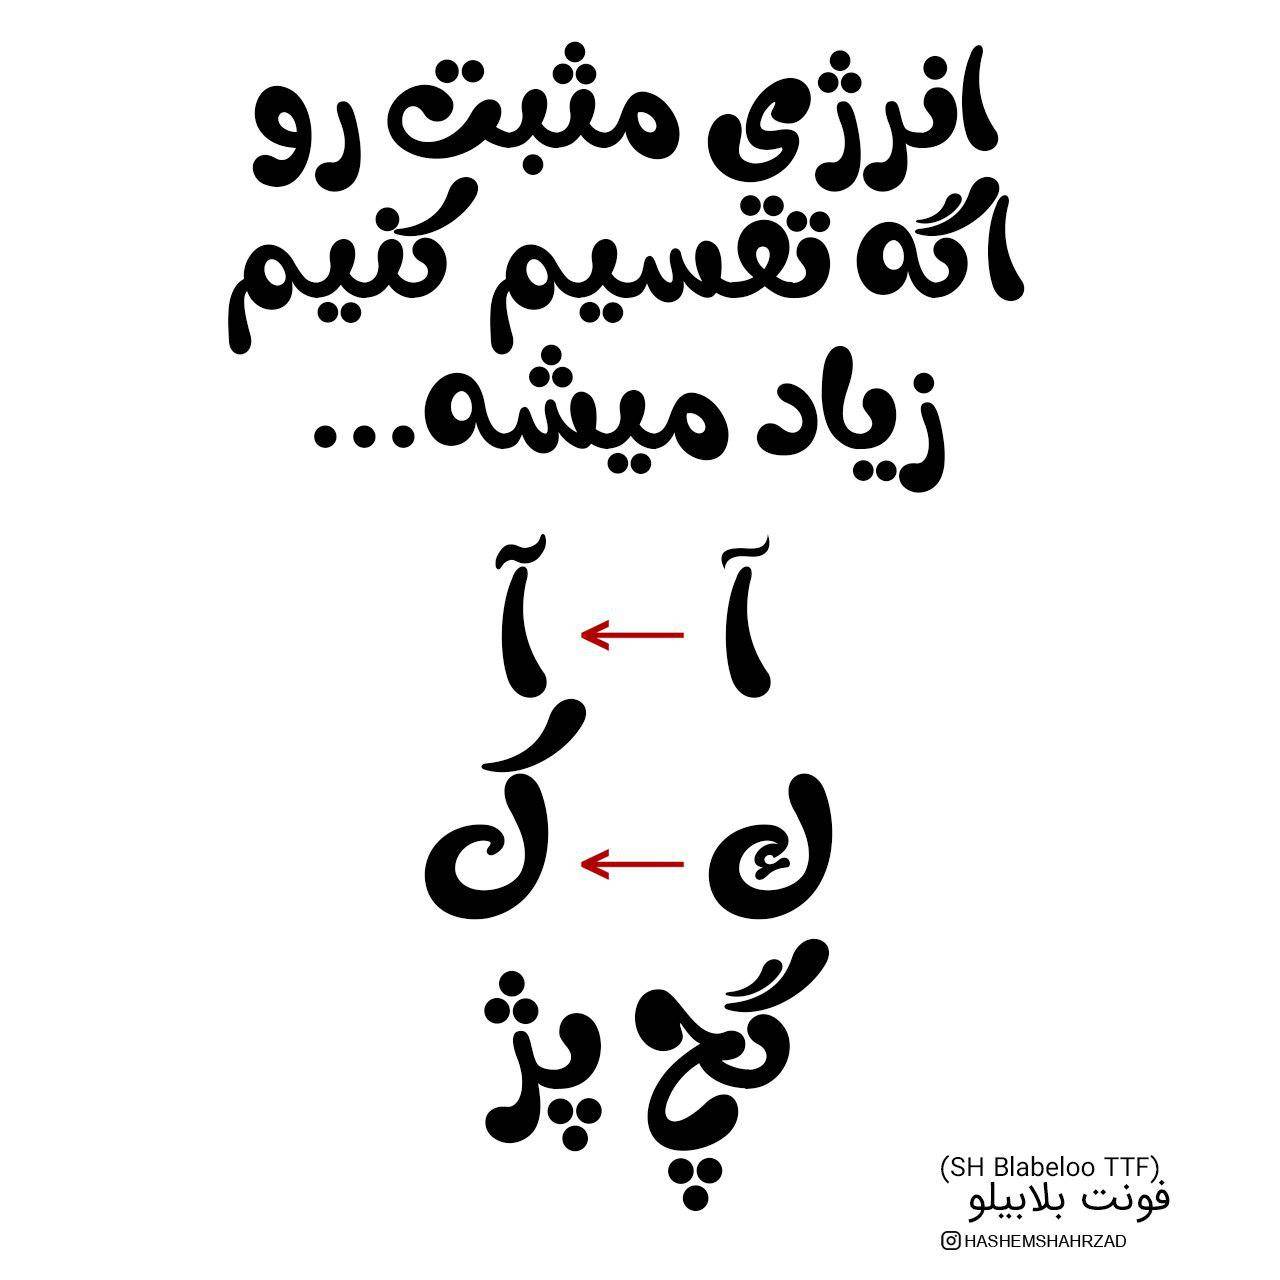 نسخه فارسی شده فونت رایگان بلابیلو | SH Blabeloo